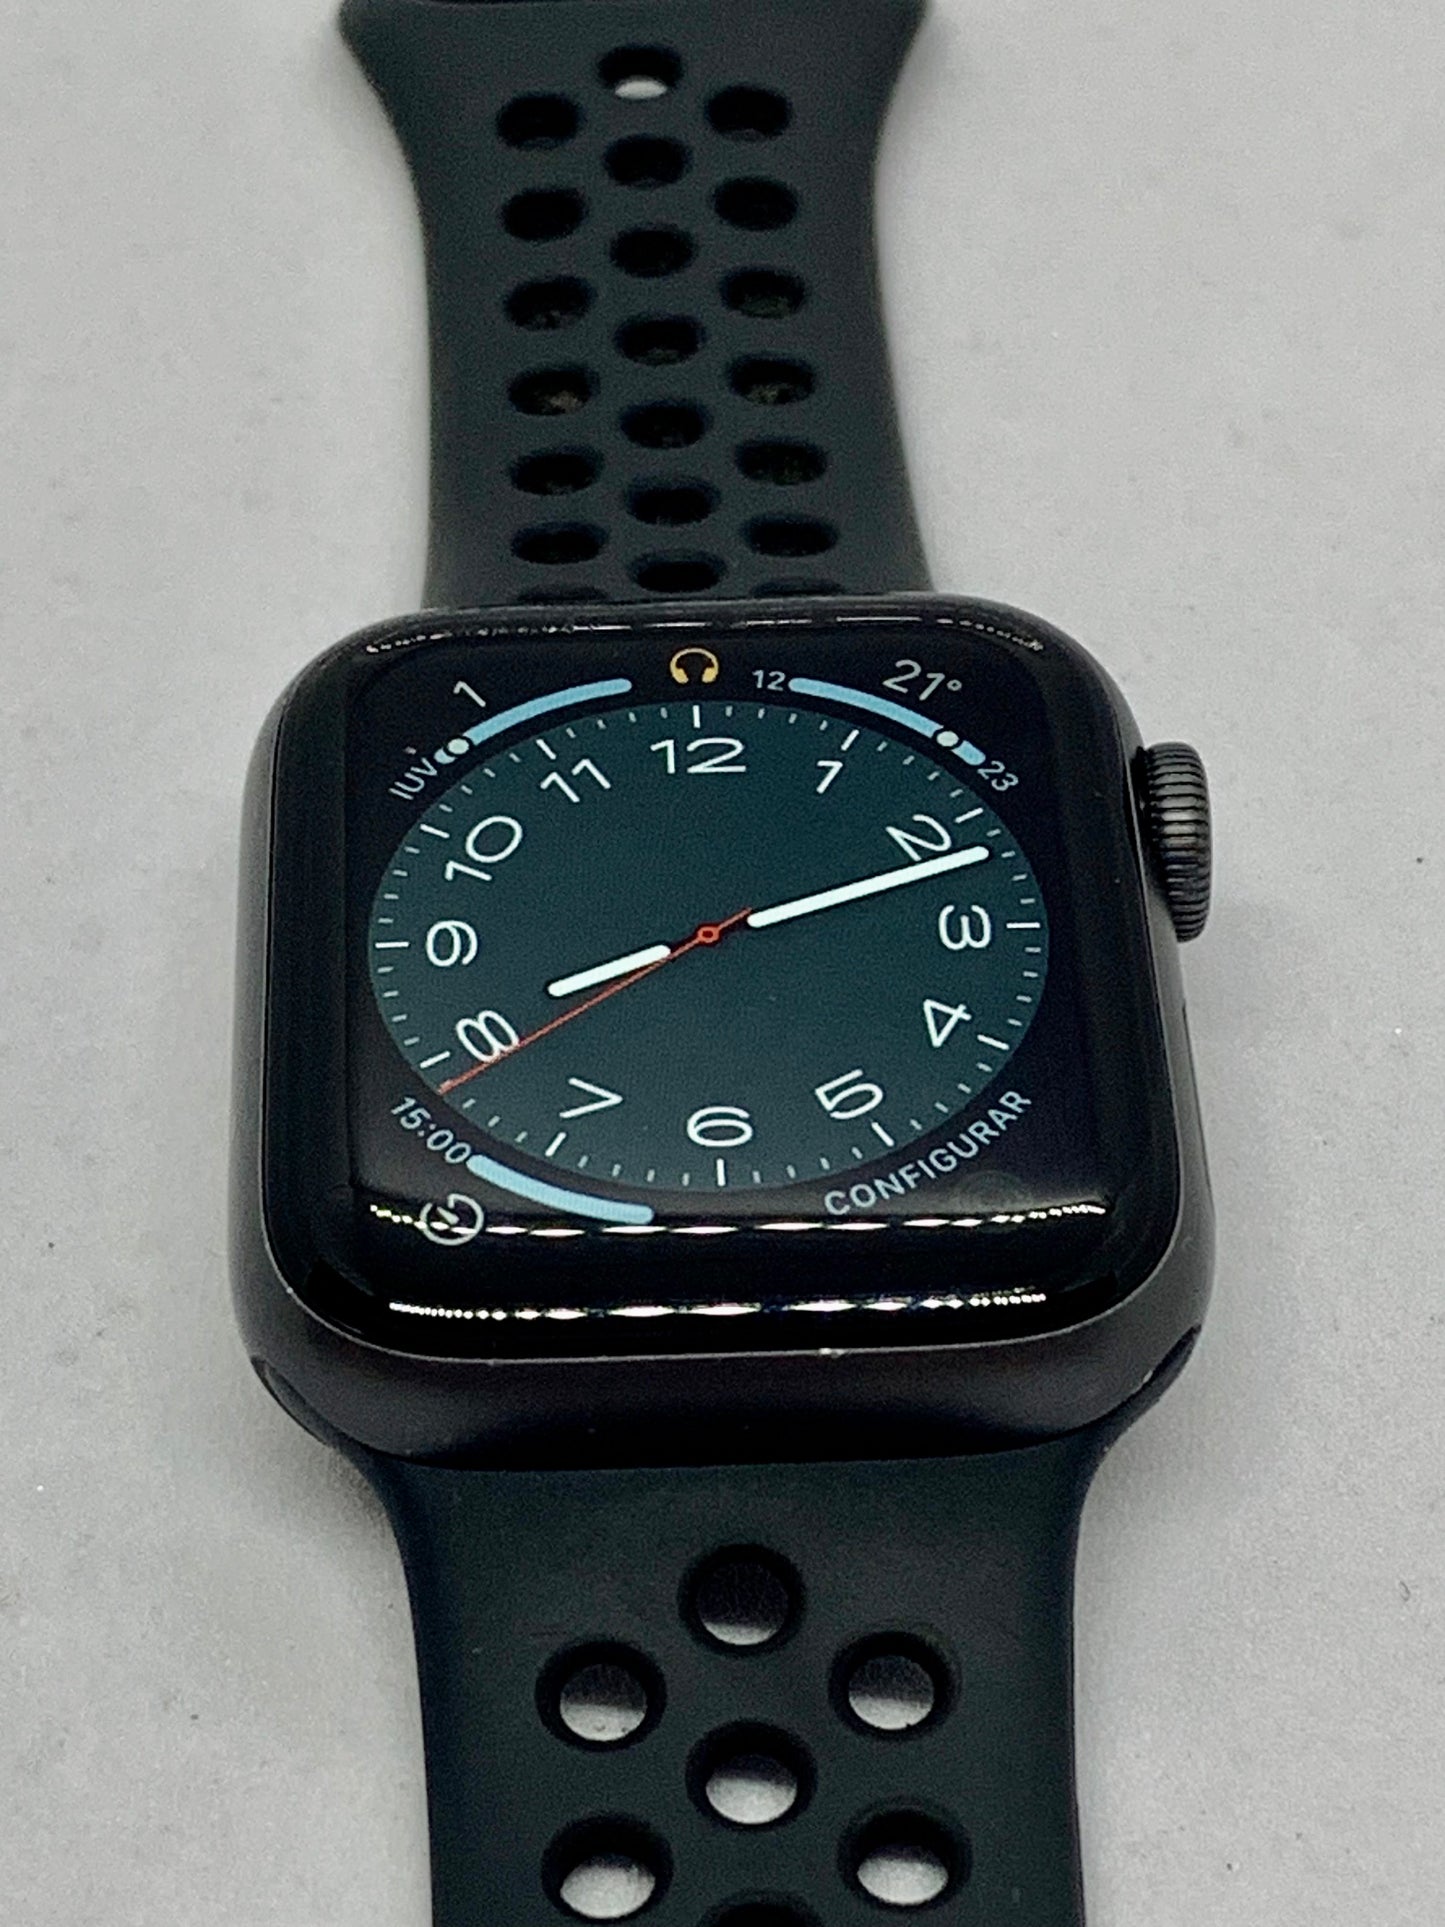 Apple Watch Series 4 40MM (GPS + CELLULAR), USADO